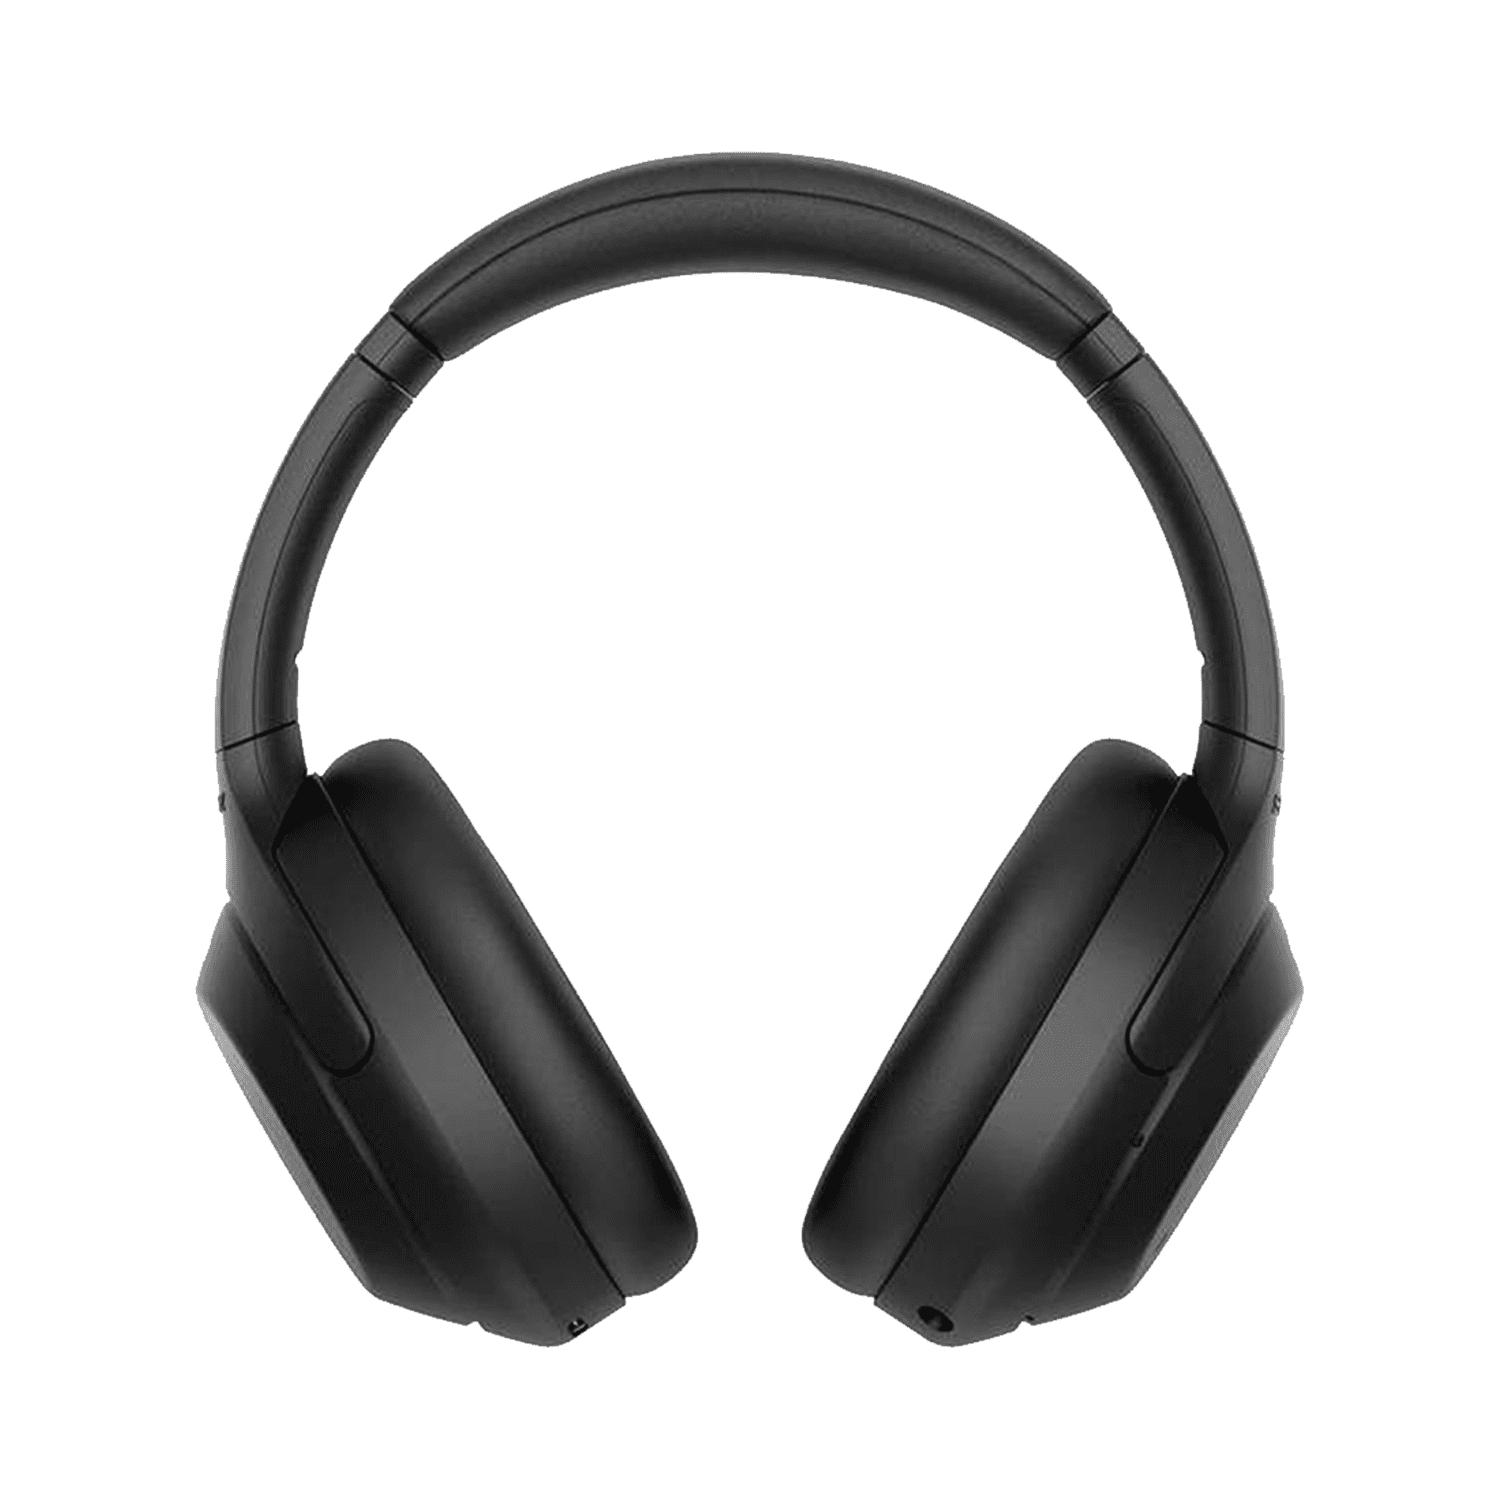 Sony Wireless Noise Cancelling Headphones WH-1000XM4 | Swiftronics ...